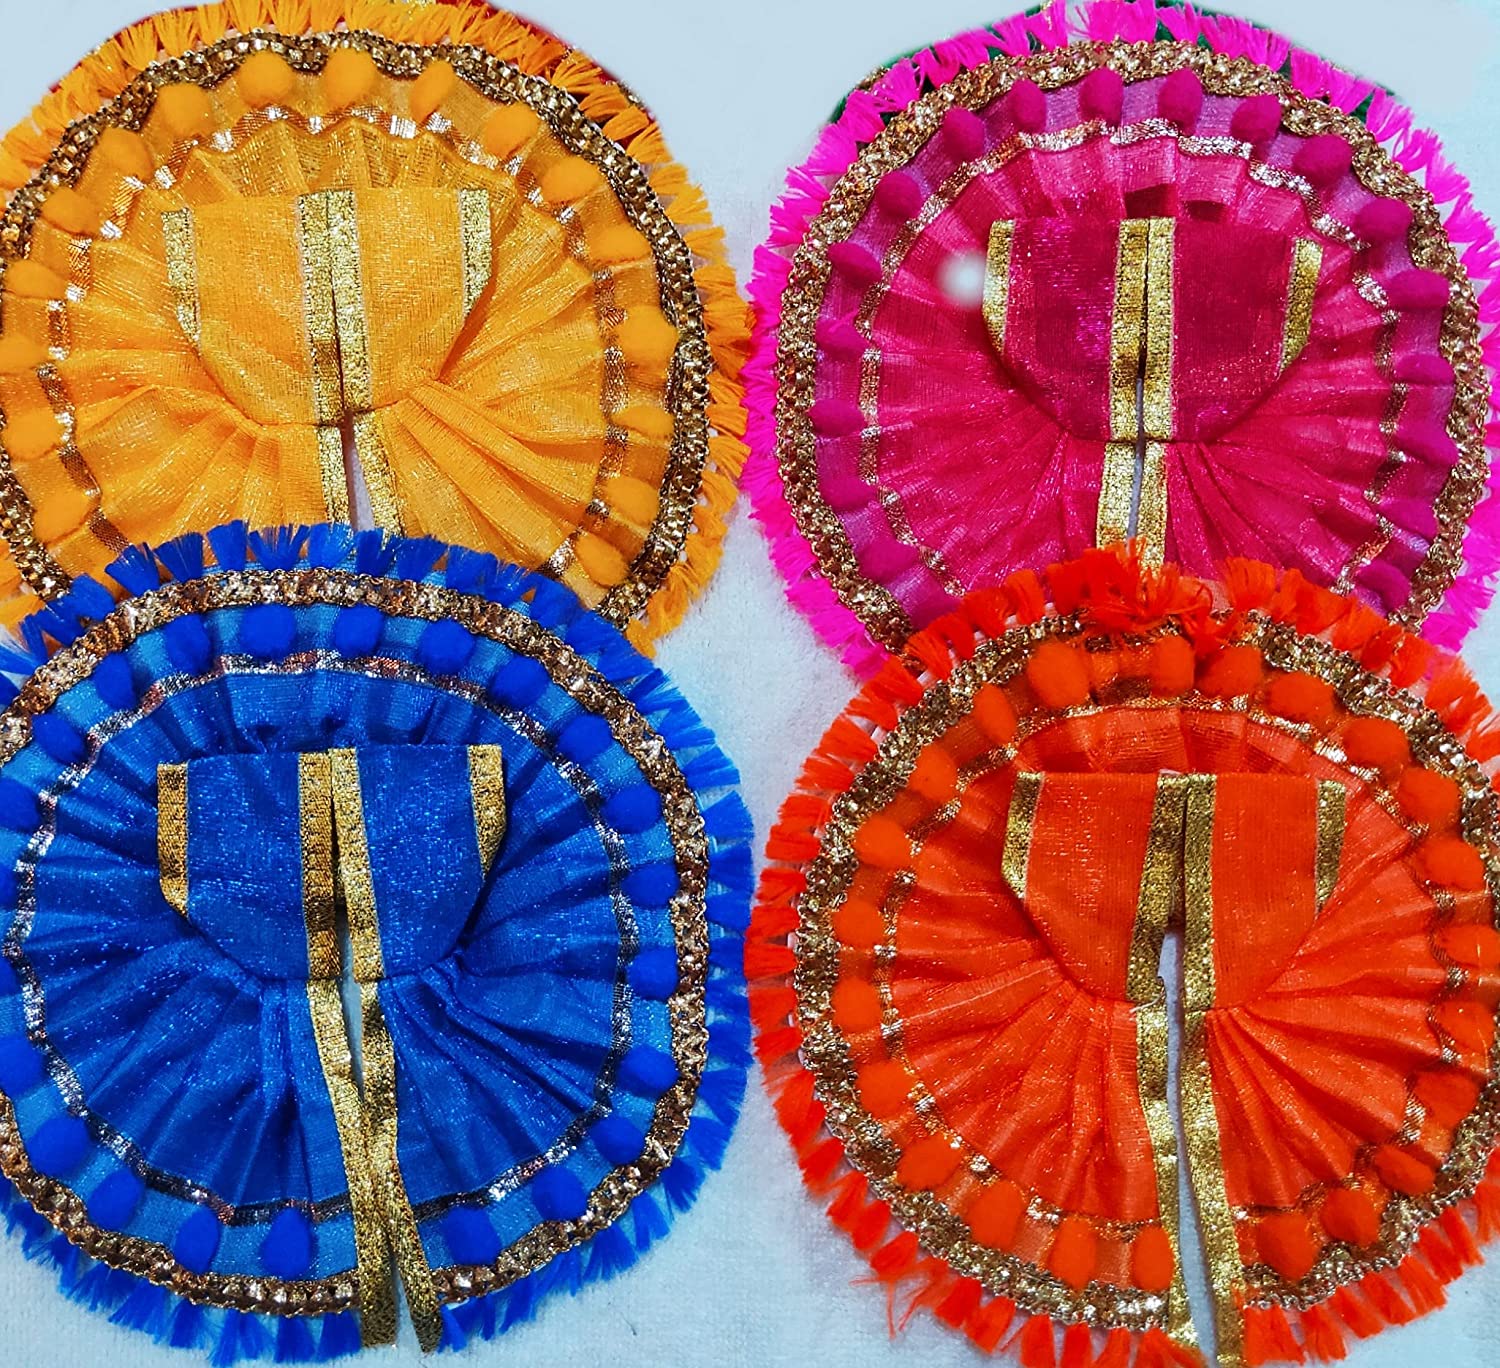 Avishi Laddu Gopal ji Dress Singhasan Combo Size 3 No. Dress Price in India  - Buy Avishi Laddu Gopal ji Dress Singhasan Combo Size 3 No. Dress online  at Flipkart.com